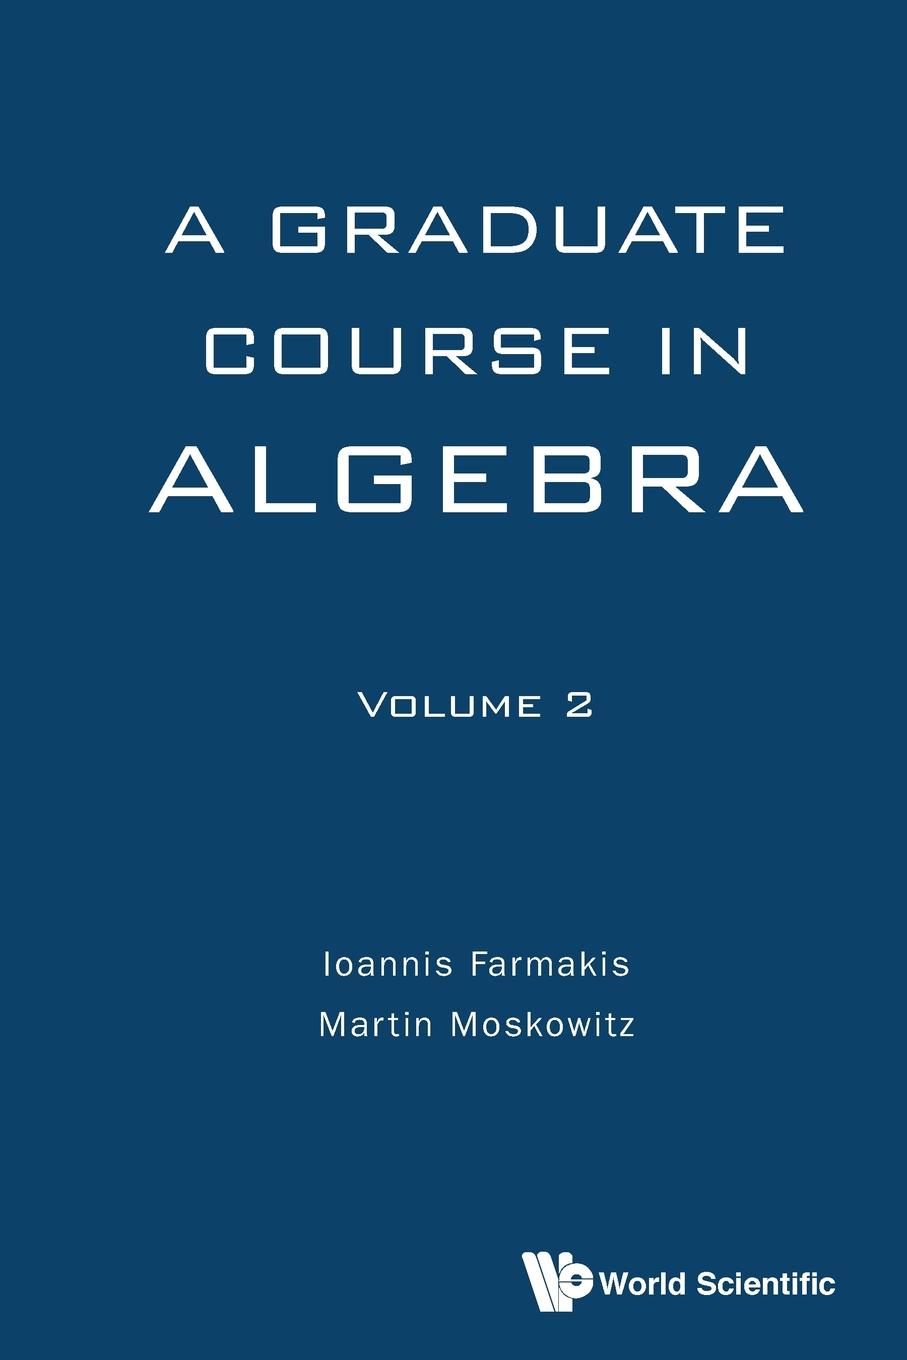 Ioannis Farmakis, Martin Moskowitz A Graduate Course in Algebra - Volume 2